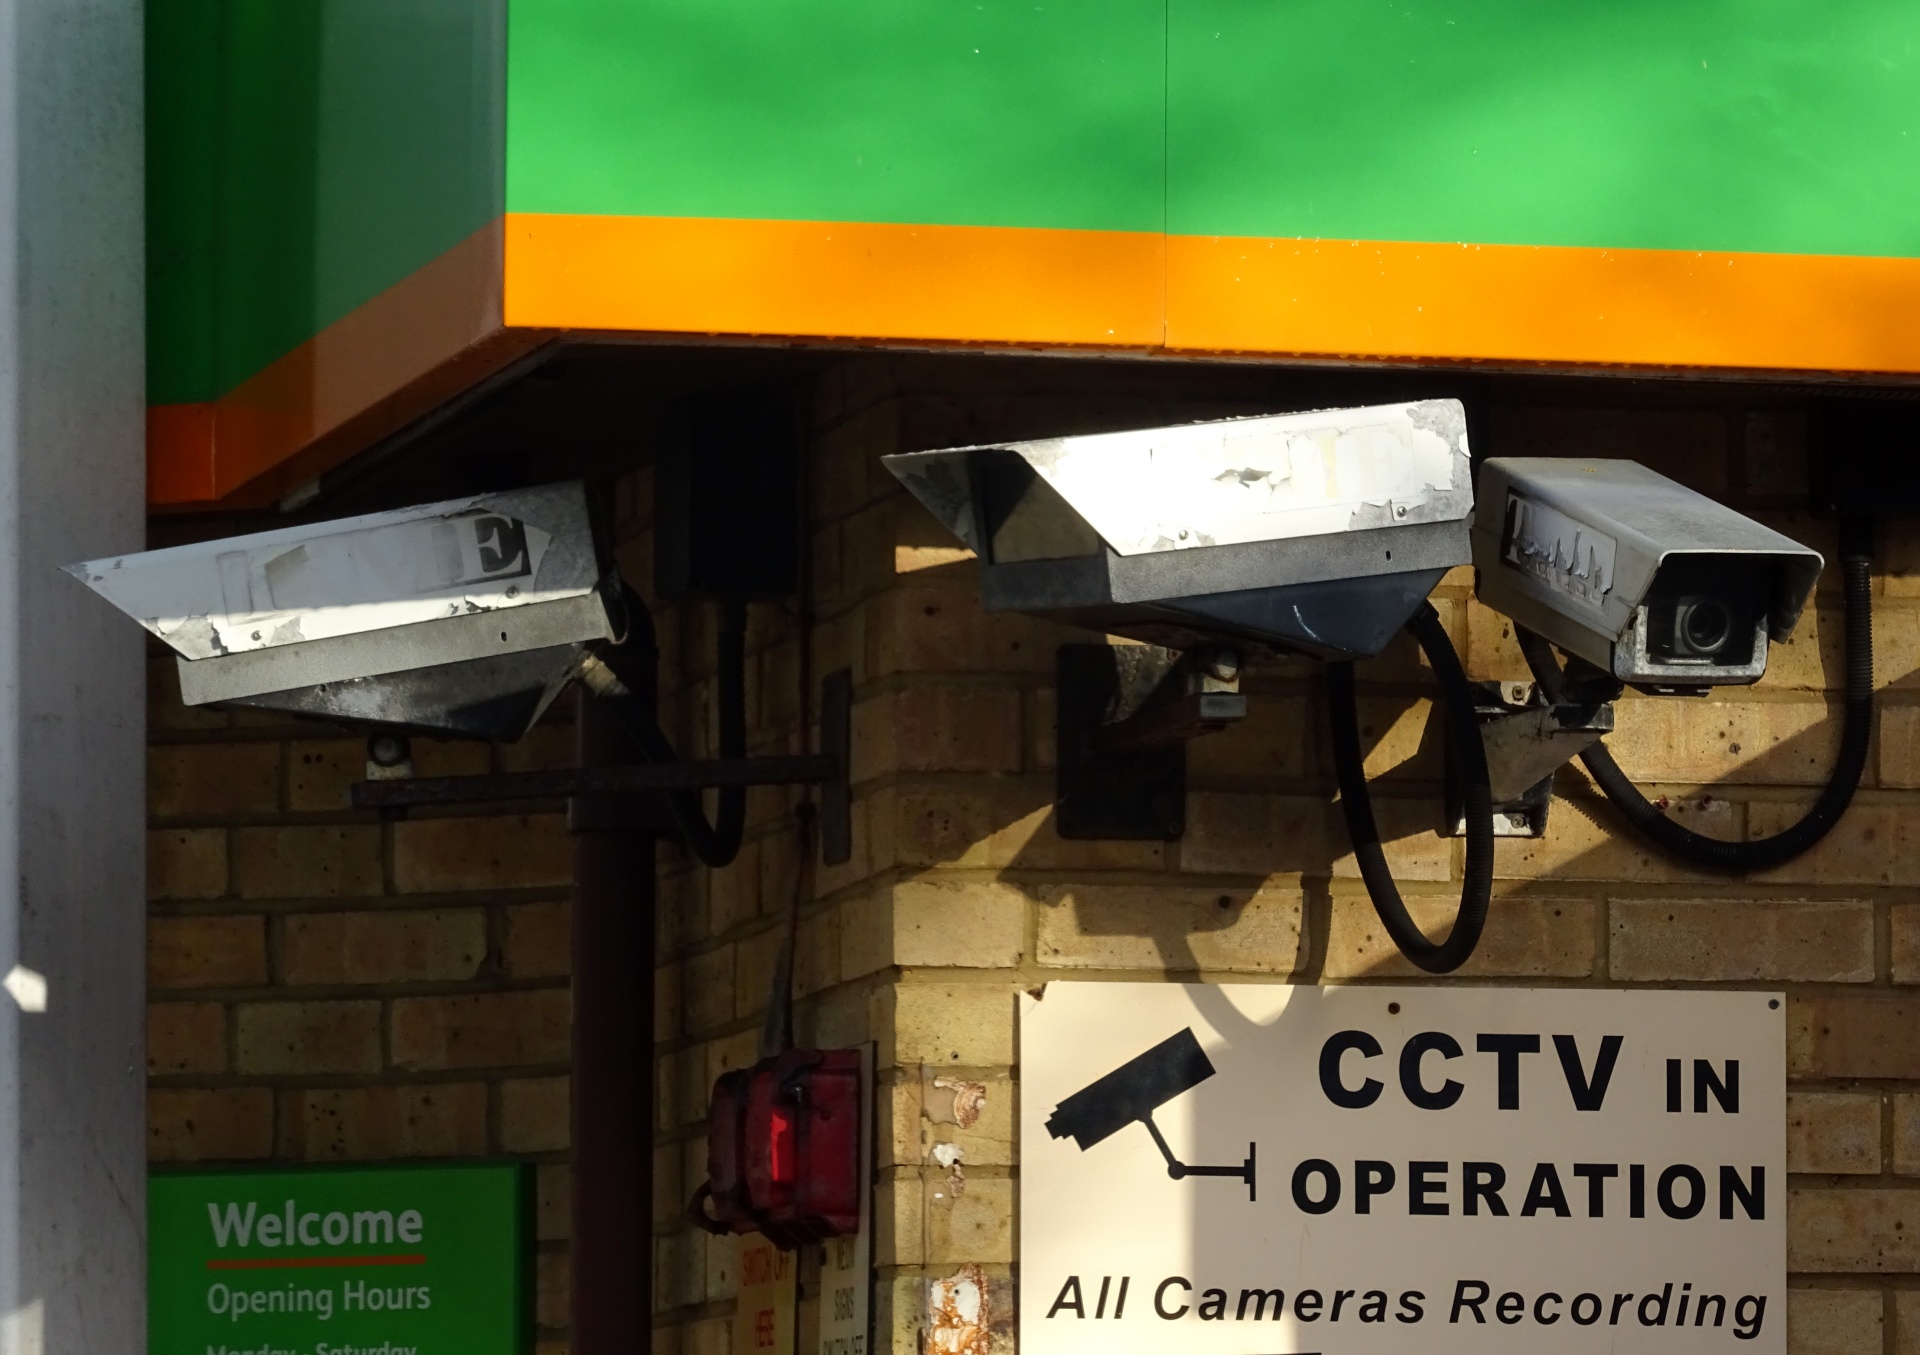 CCTV Cameras In Operation